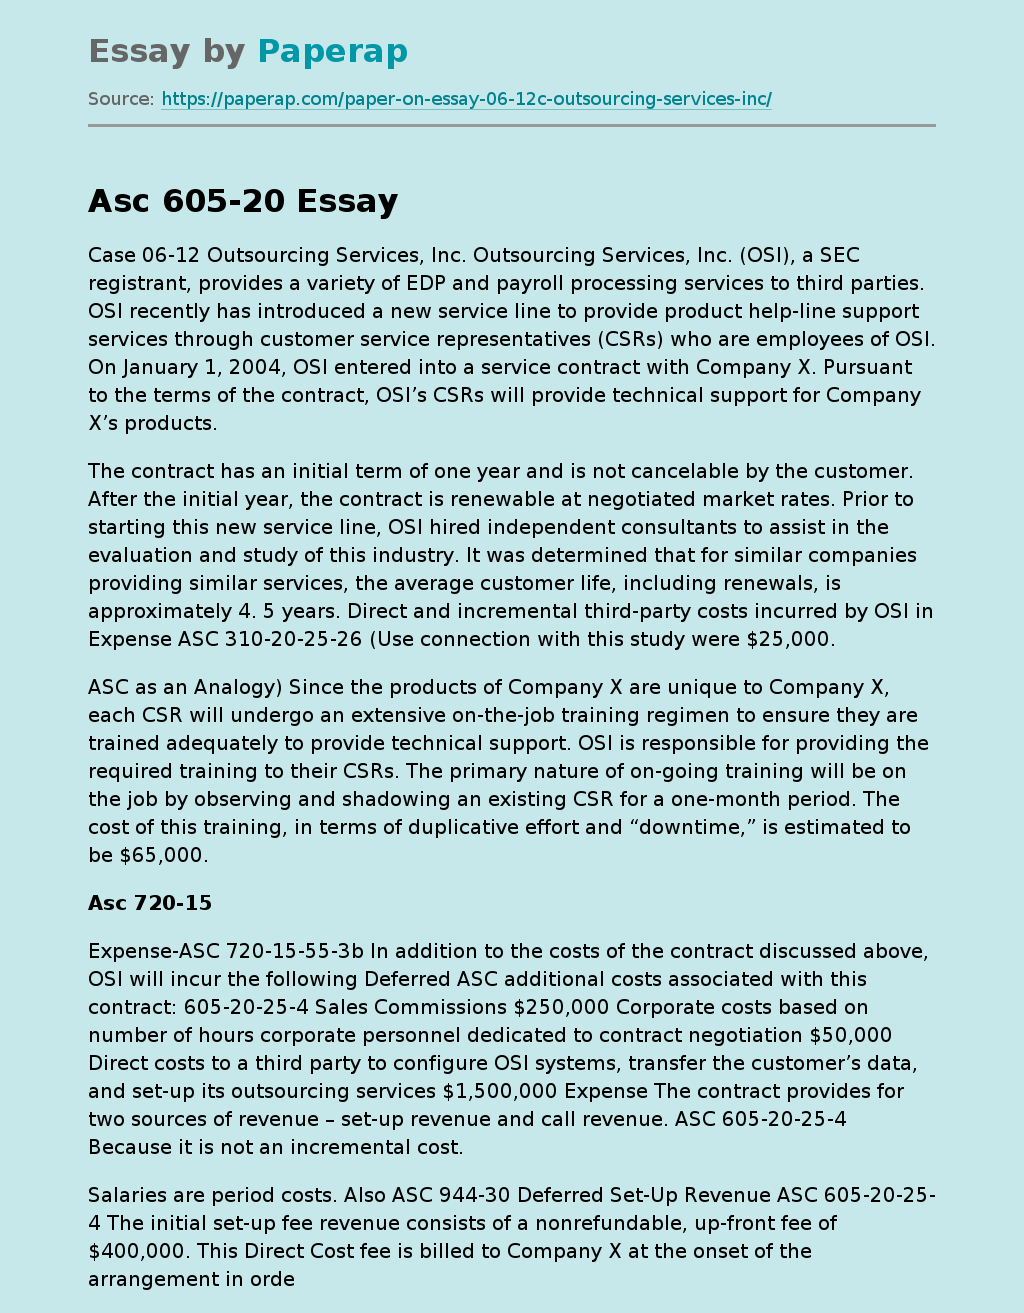 Asc 605-20